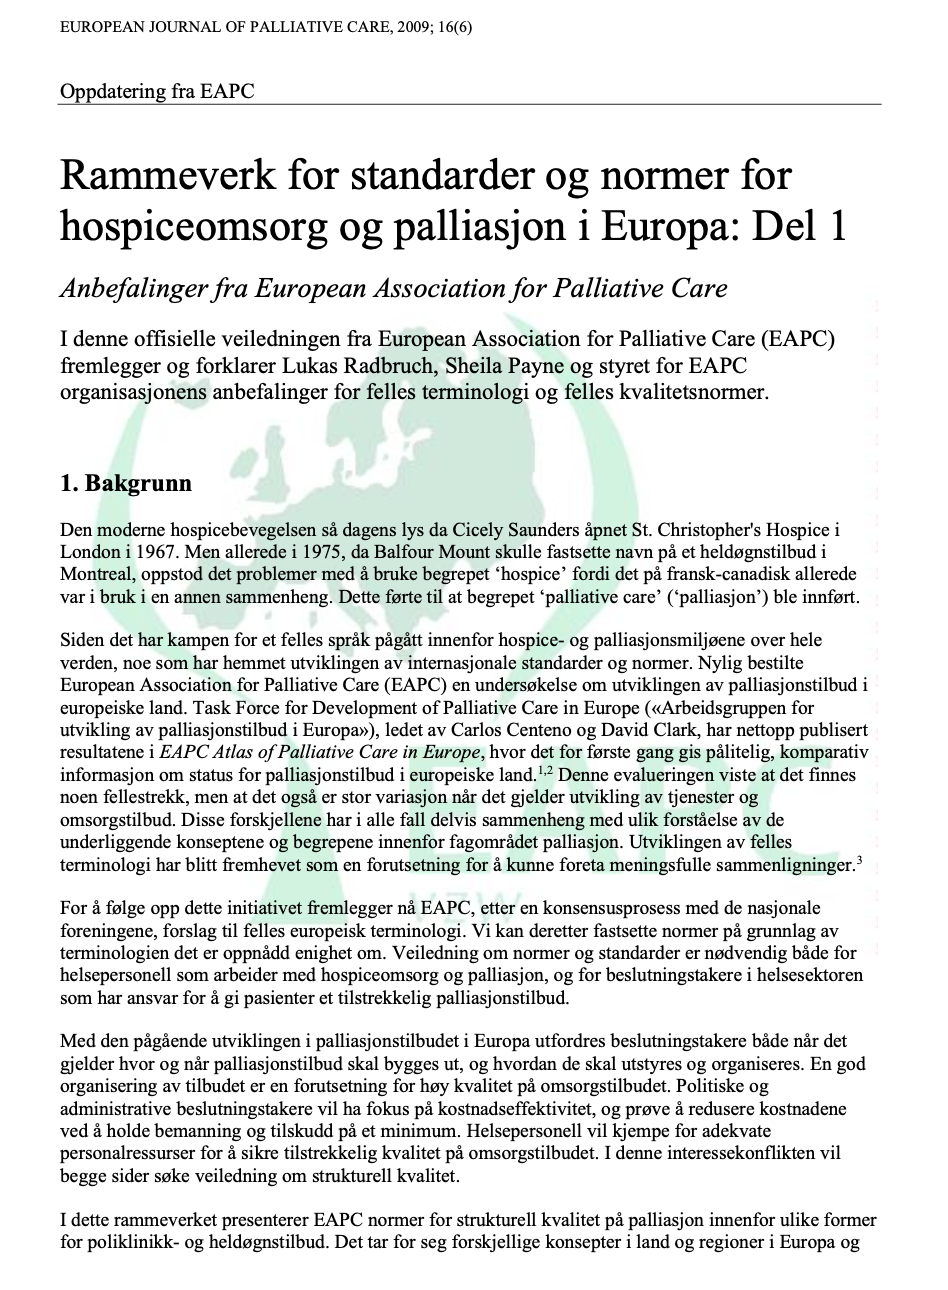 Anbefalinger fra European Association for Palliative Care